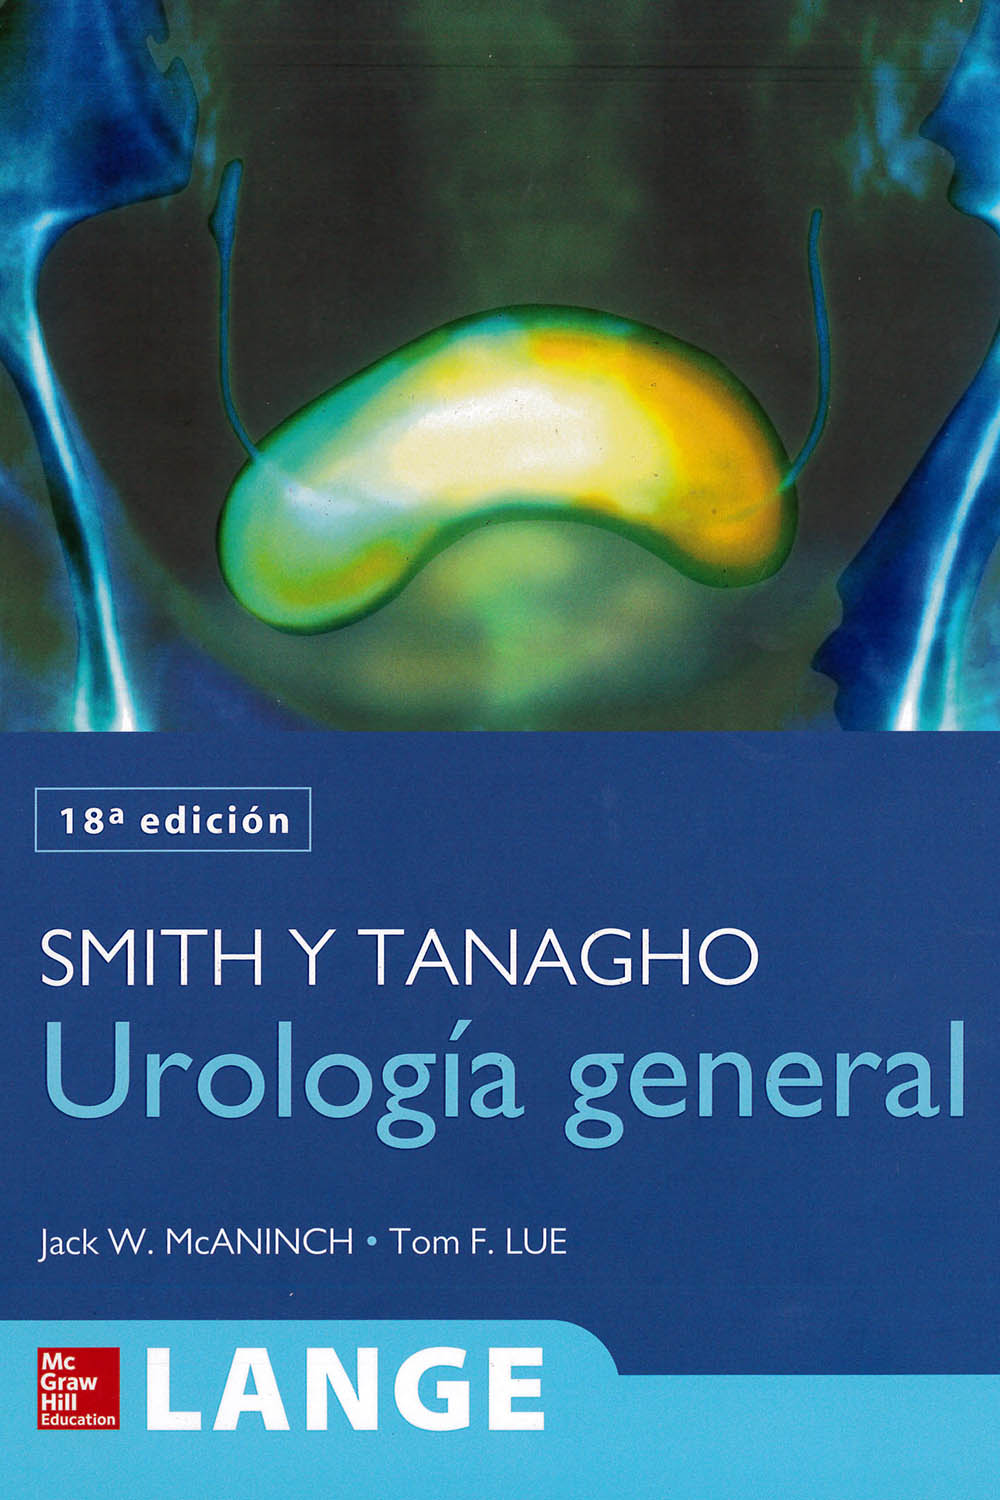 25 / 26 - RC871 S55 2014 Urología general, Smith y Tanagho - McGraw Hill, México 2014